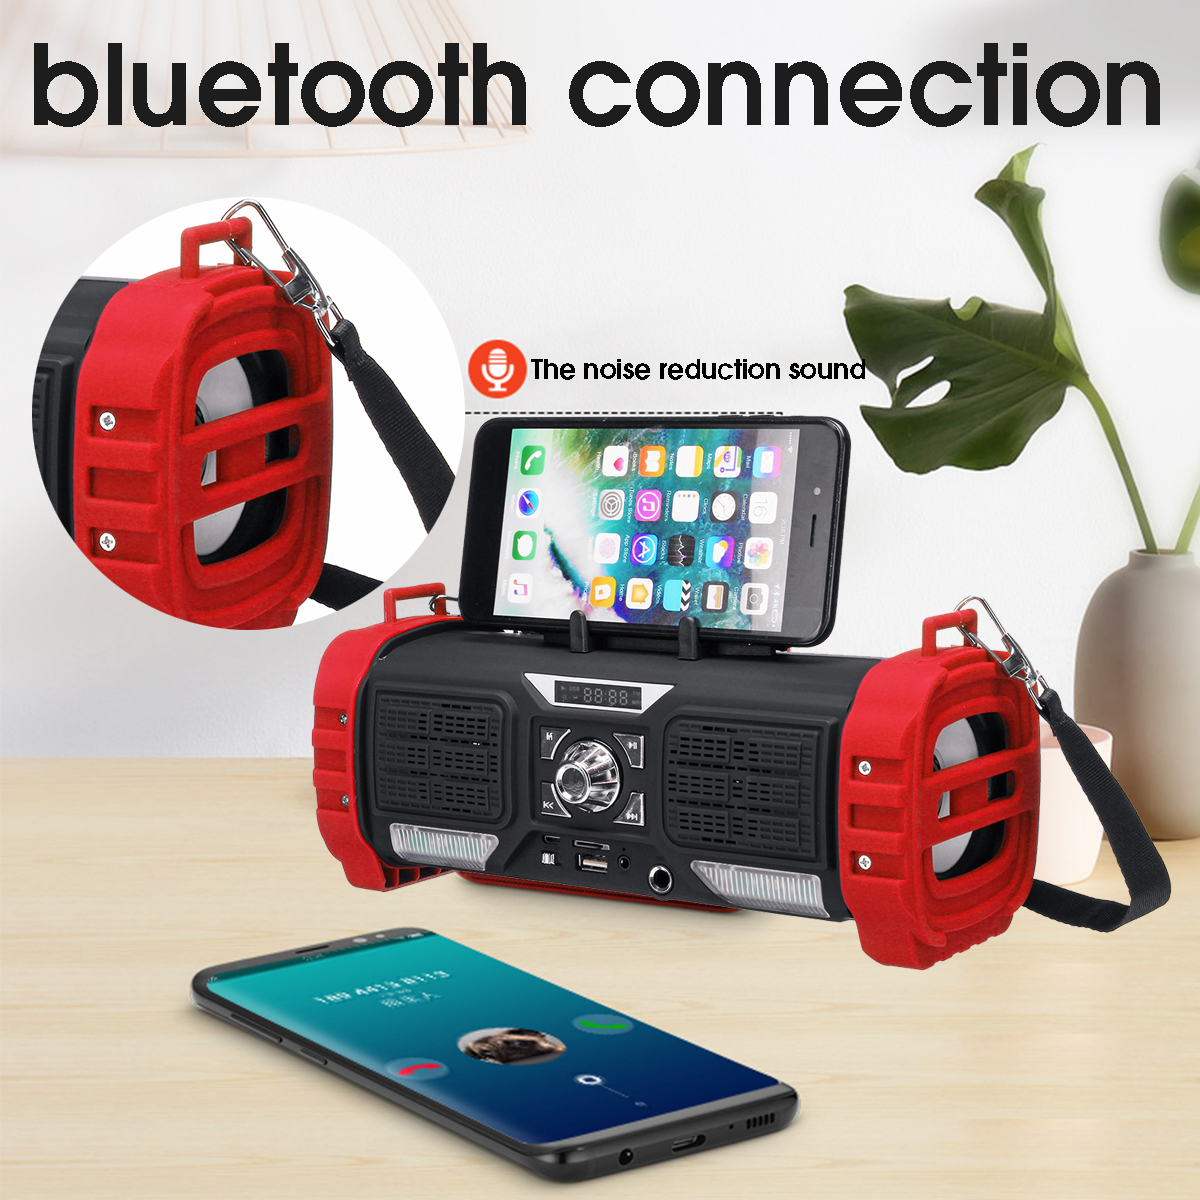 Bakeey-220mAh-Wireless-bluetooth-Speaker-Subwoofer-HD-MIC-AUX-355mm-Port-FM-Raido-Heavy-Bass-Music-A-1650387-2